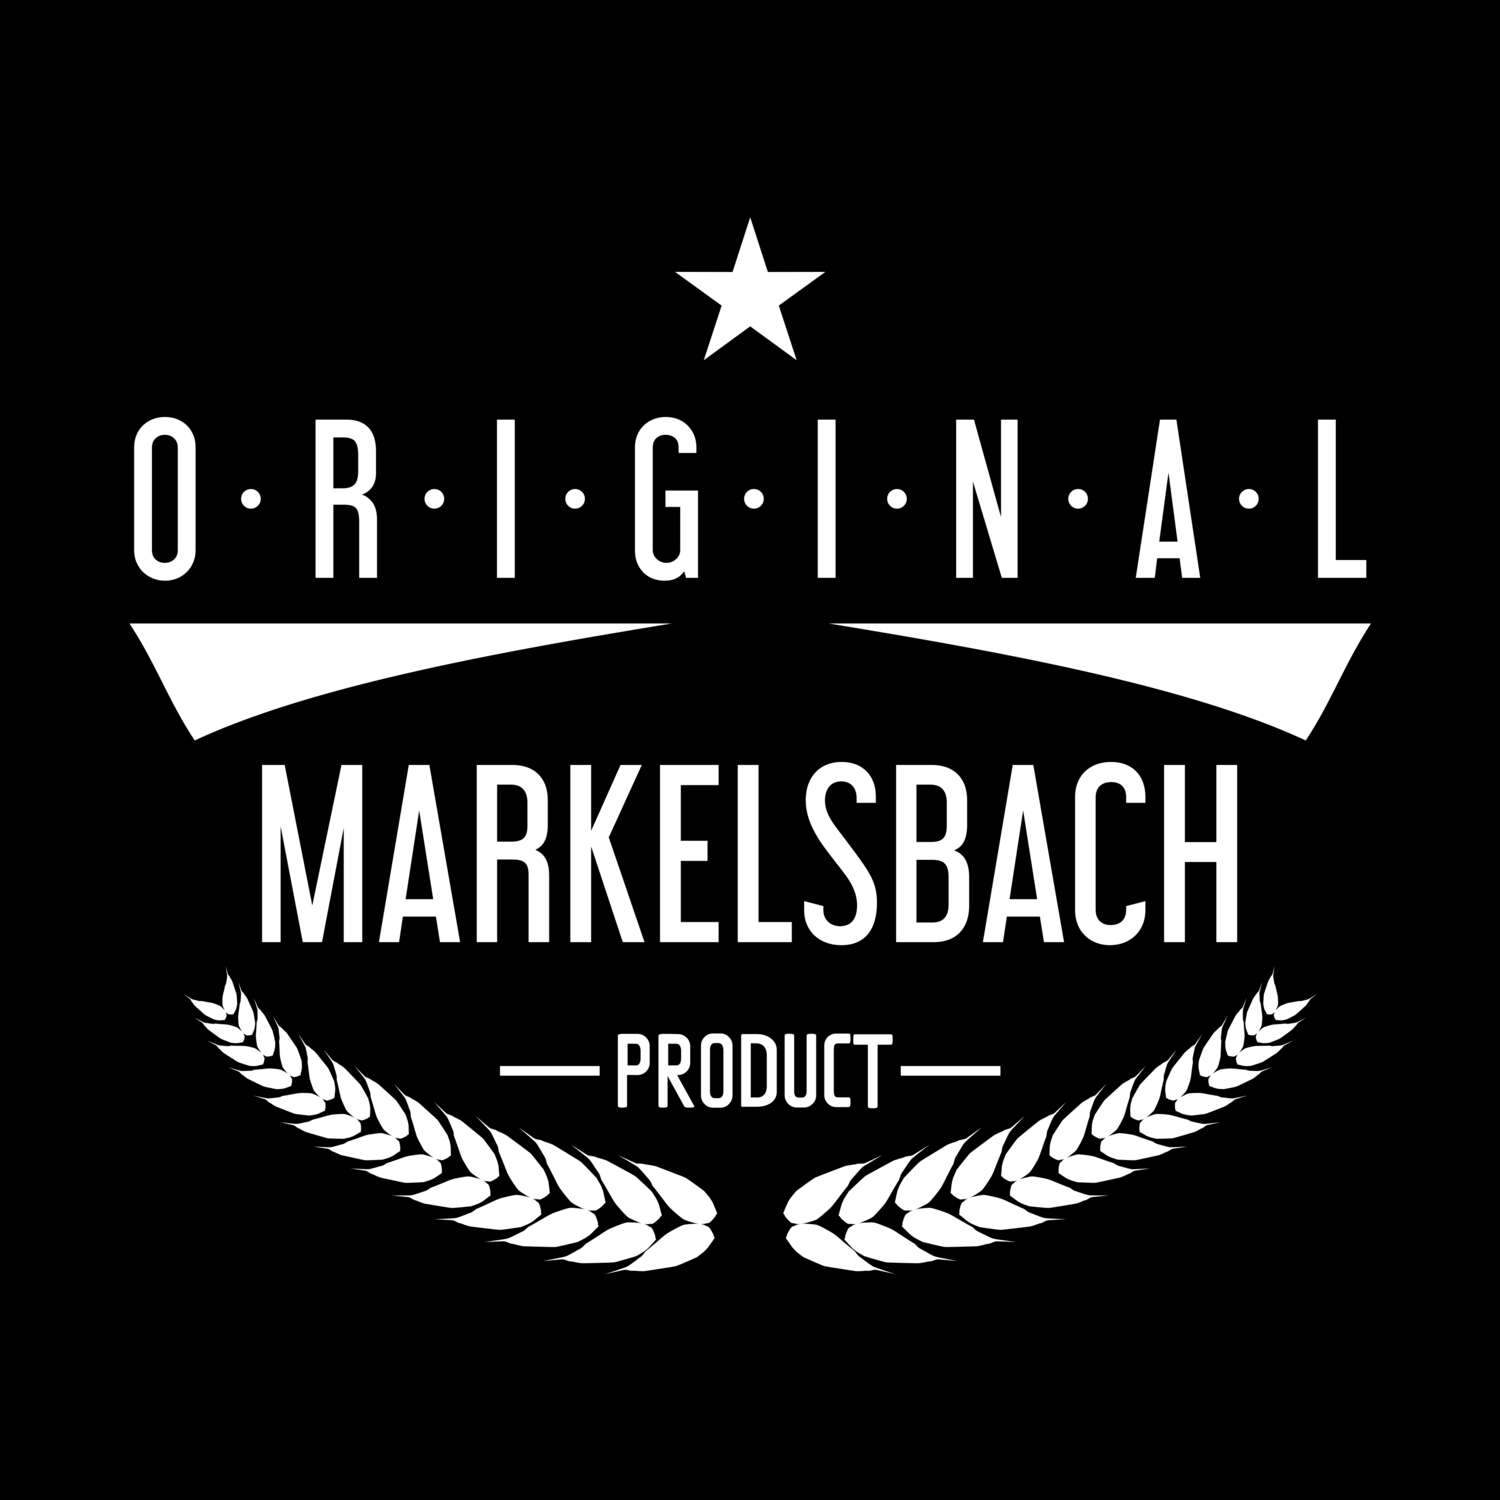 Markelsbach T-Shirt »Original Product«